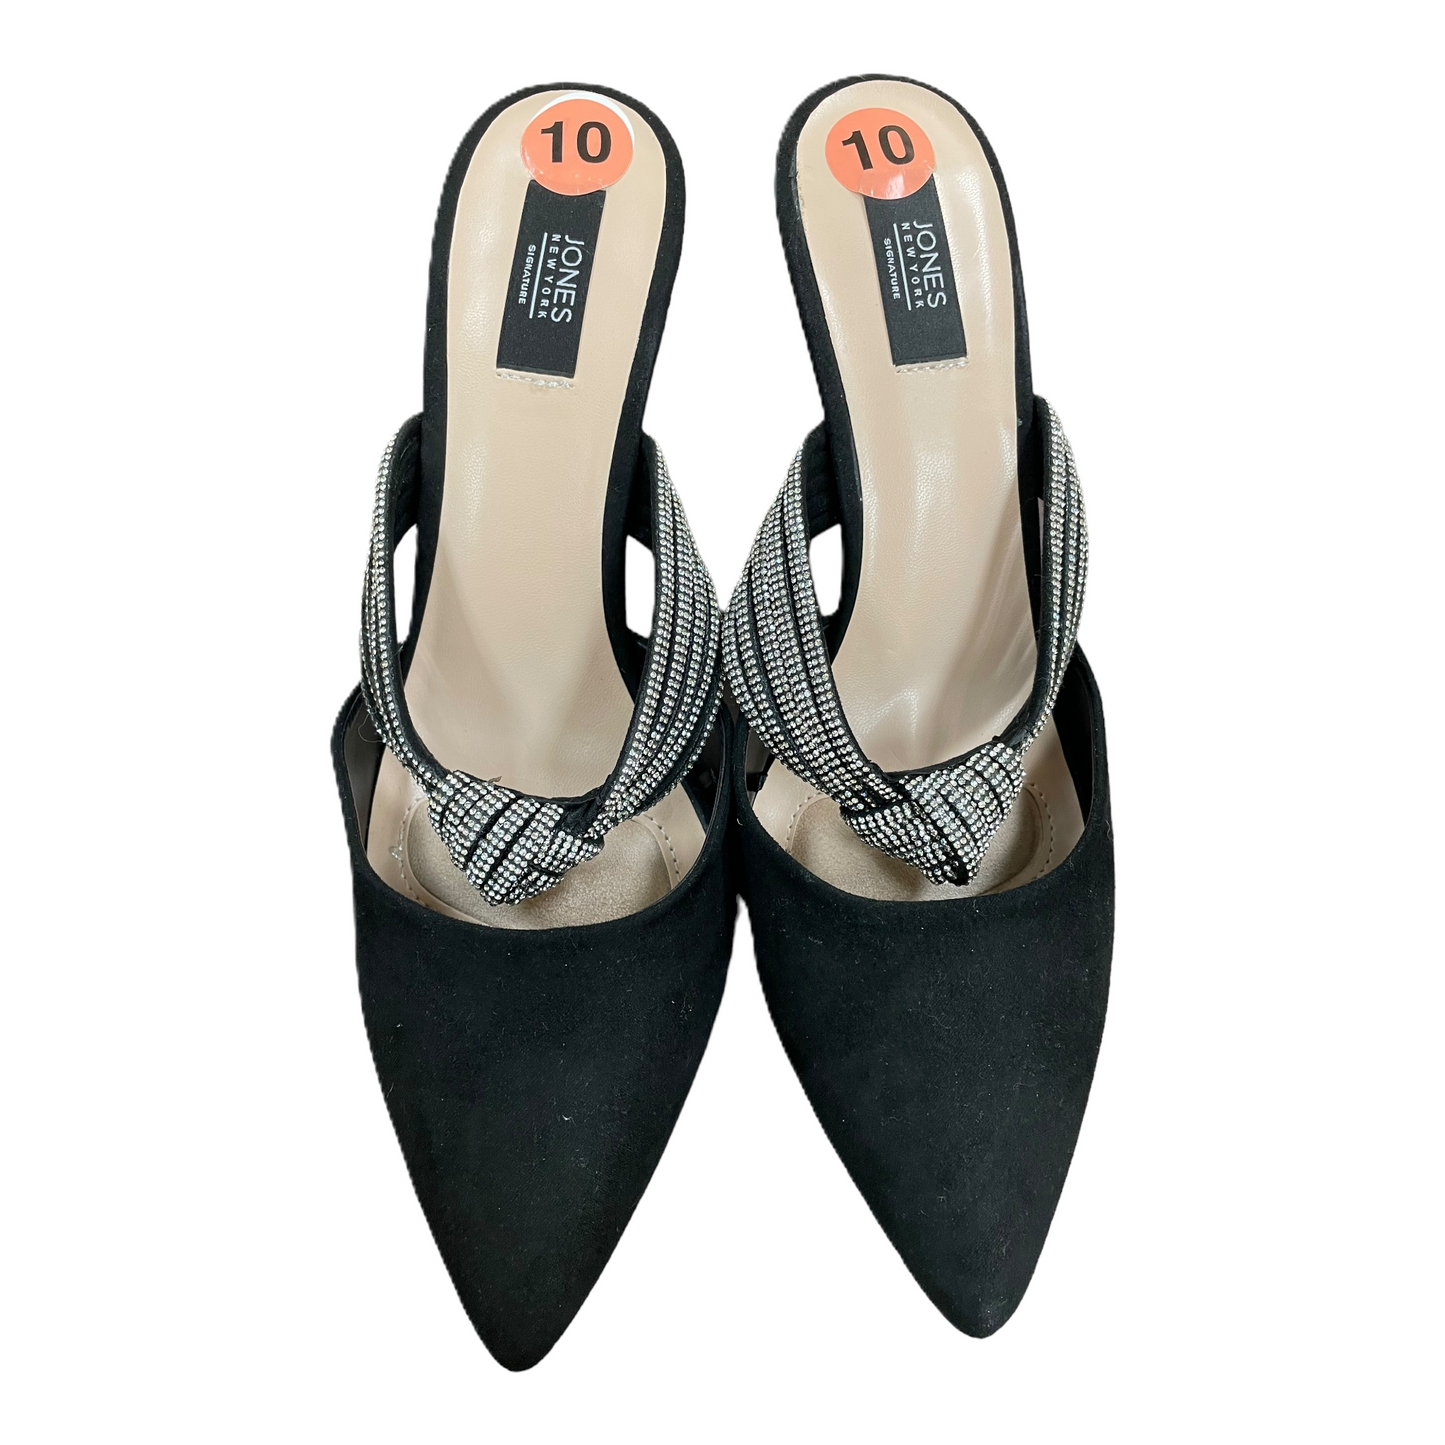 Black Shoes Heels Stiletto By Jones New York, Size: 10